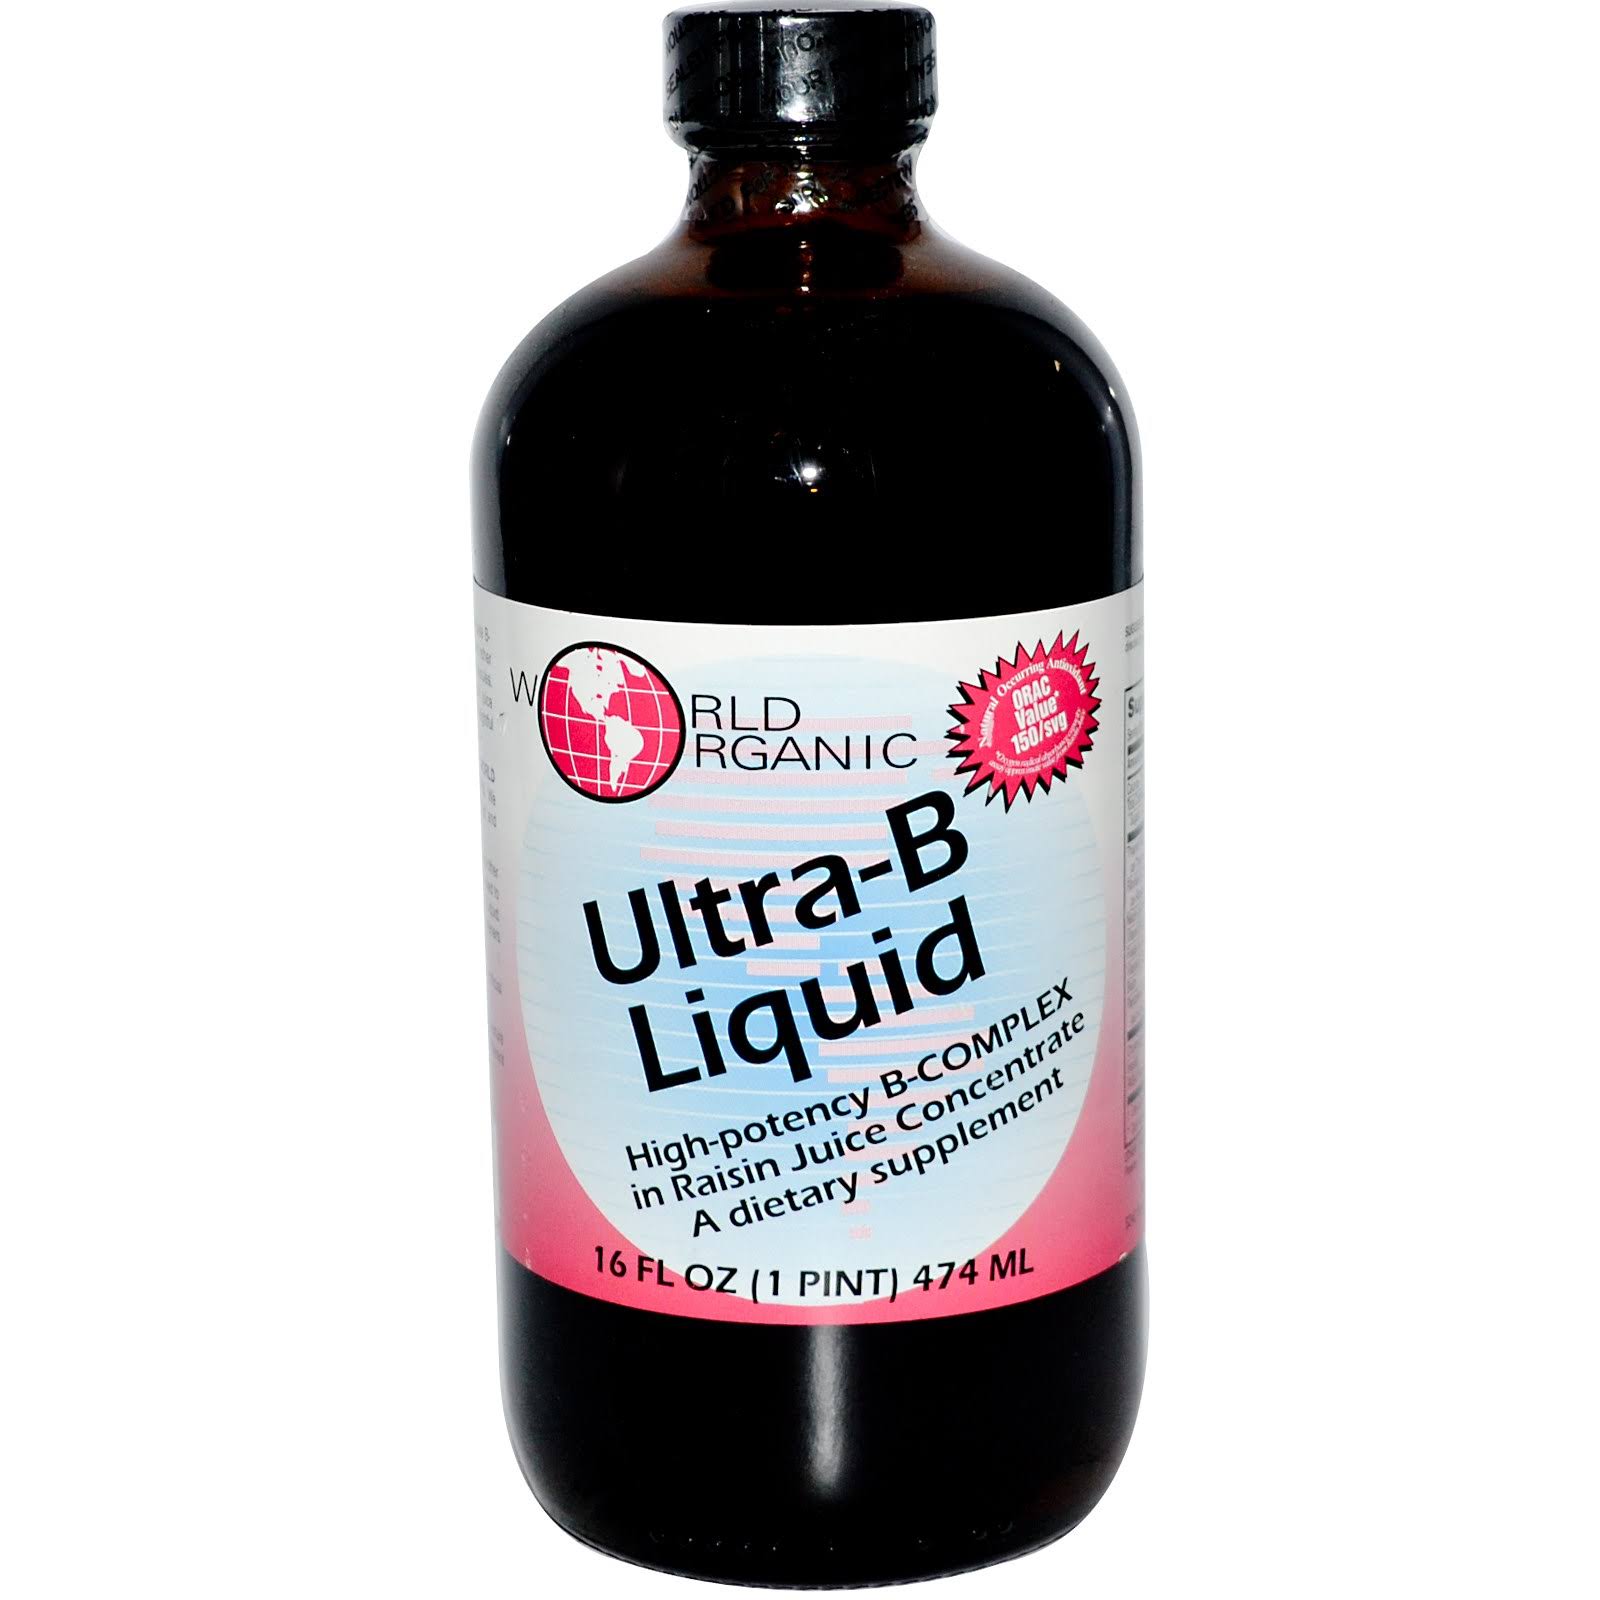 World Organic Vitamin Liquid Ultra-b Supplement - 16oz